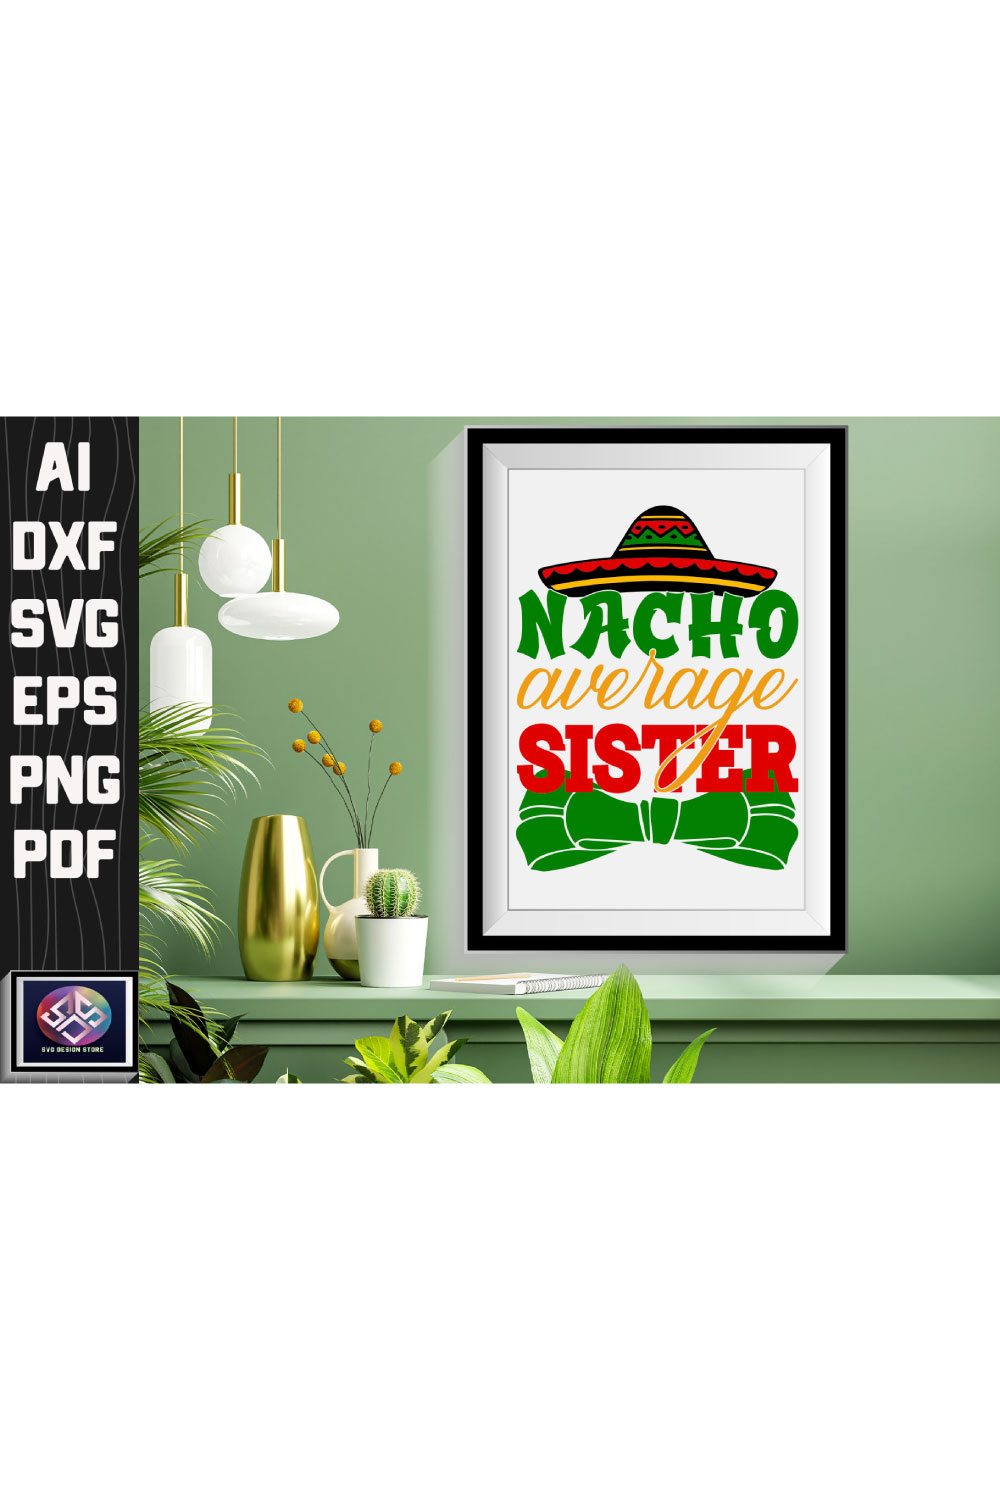 Nacho Average Sister pinterest preview image.